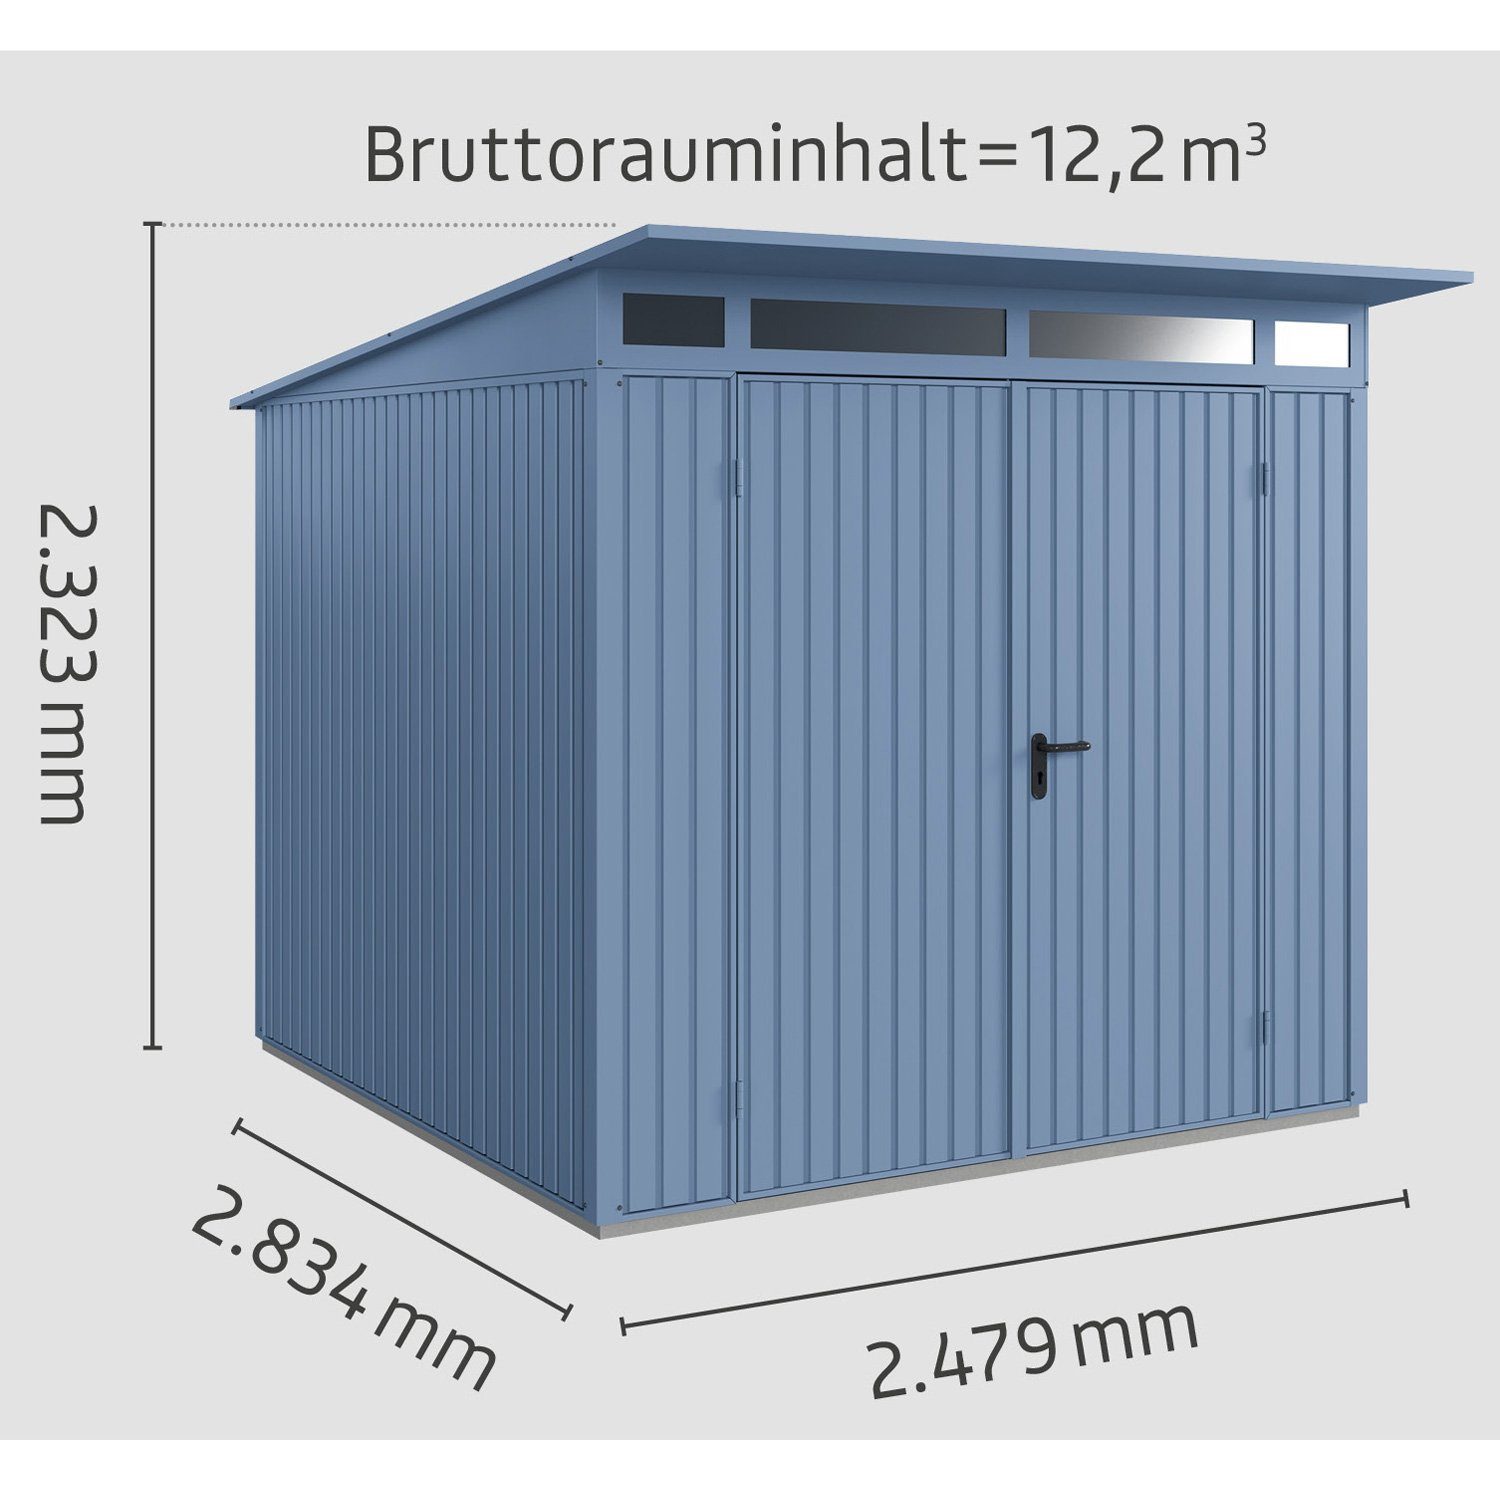 Hörmann Ecostar Gerätehaus Metall-Gerätehaus Trend mit Pultdach Typ 2, 2-flüglige Tür taubenblau